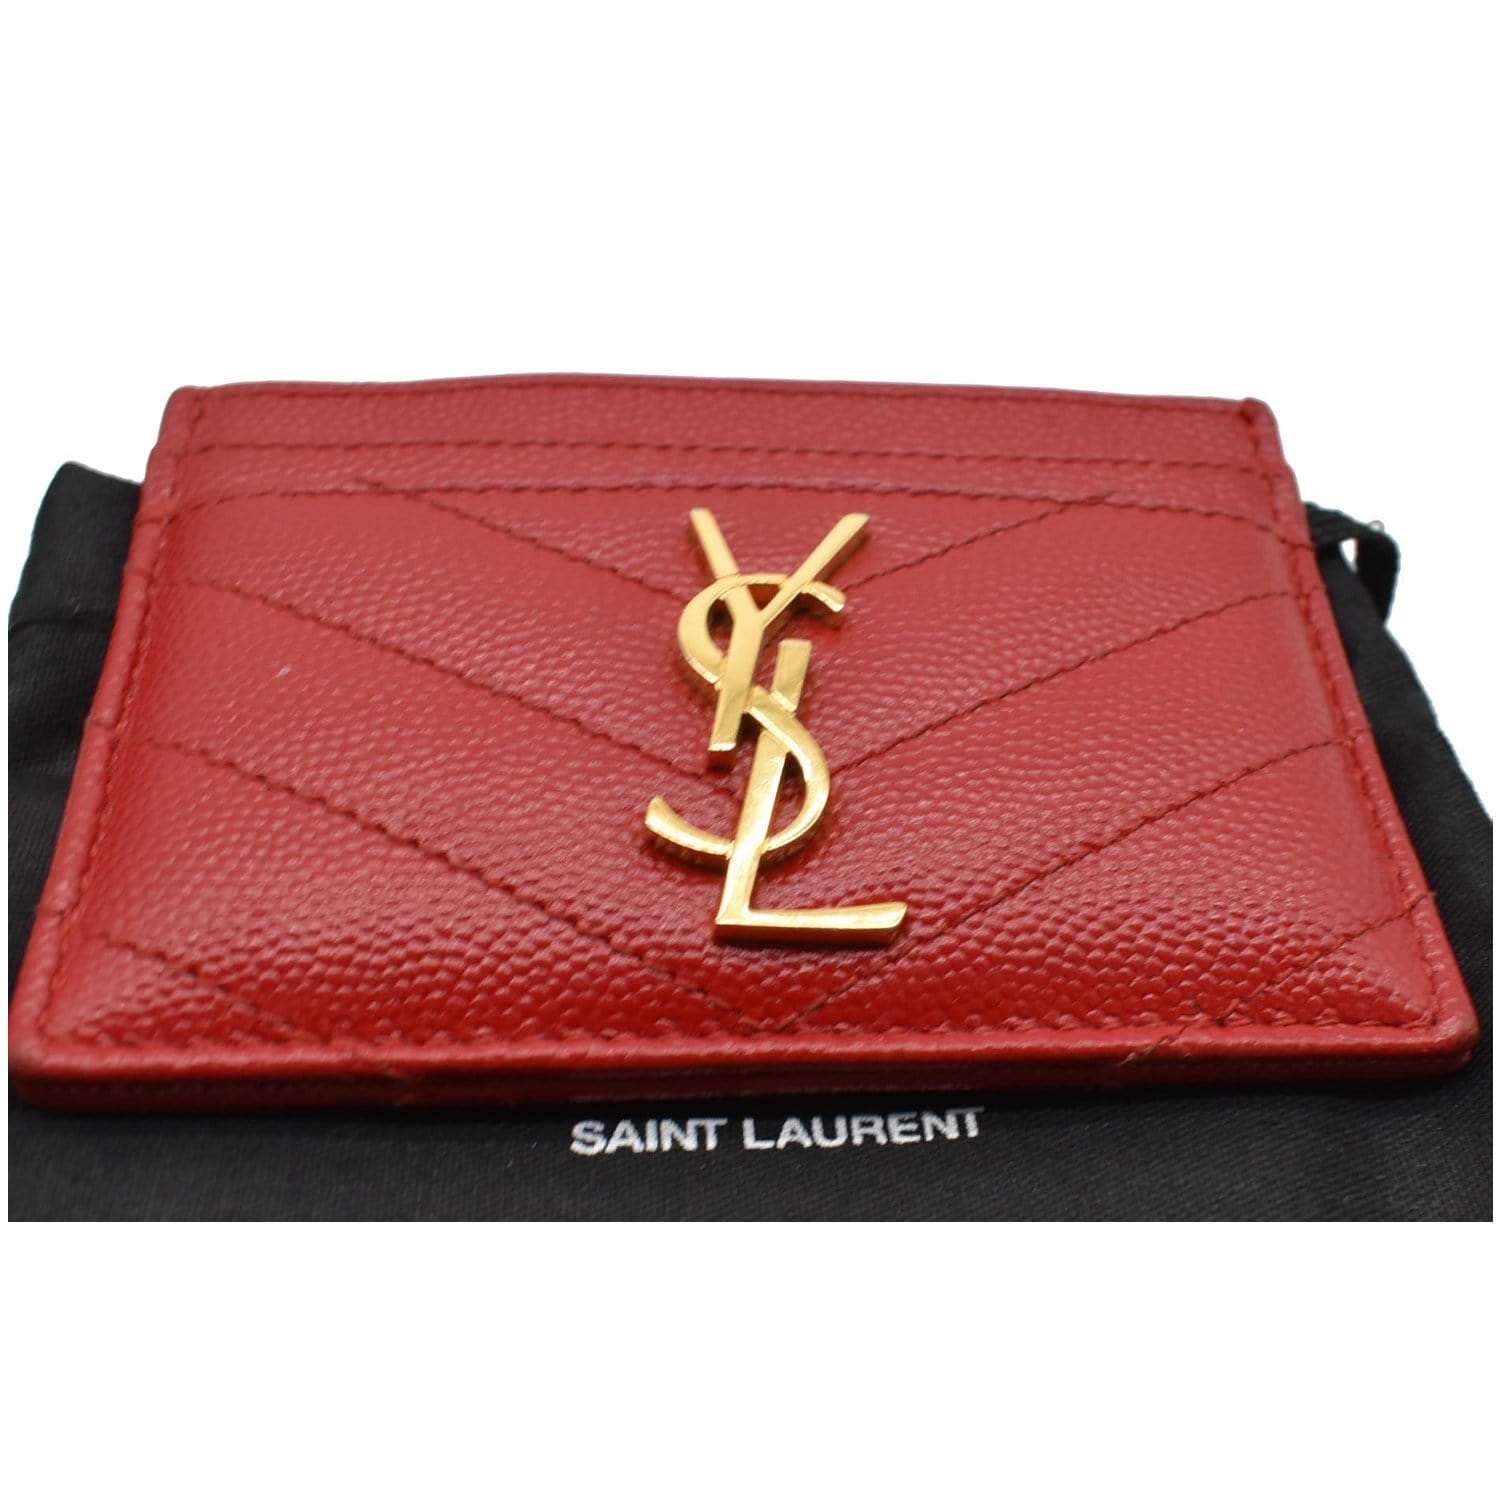 Yves Saint Laurent Monogram Card Case Grain Embossed Leather Pale Pink Gold  YSL